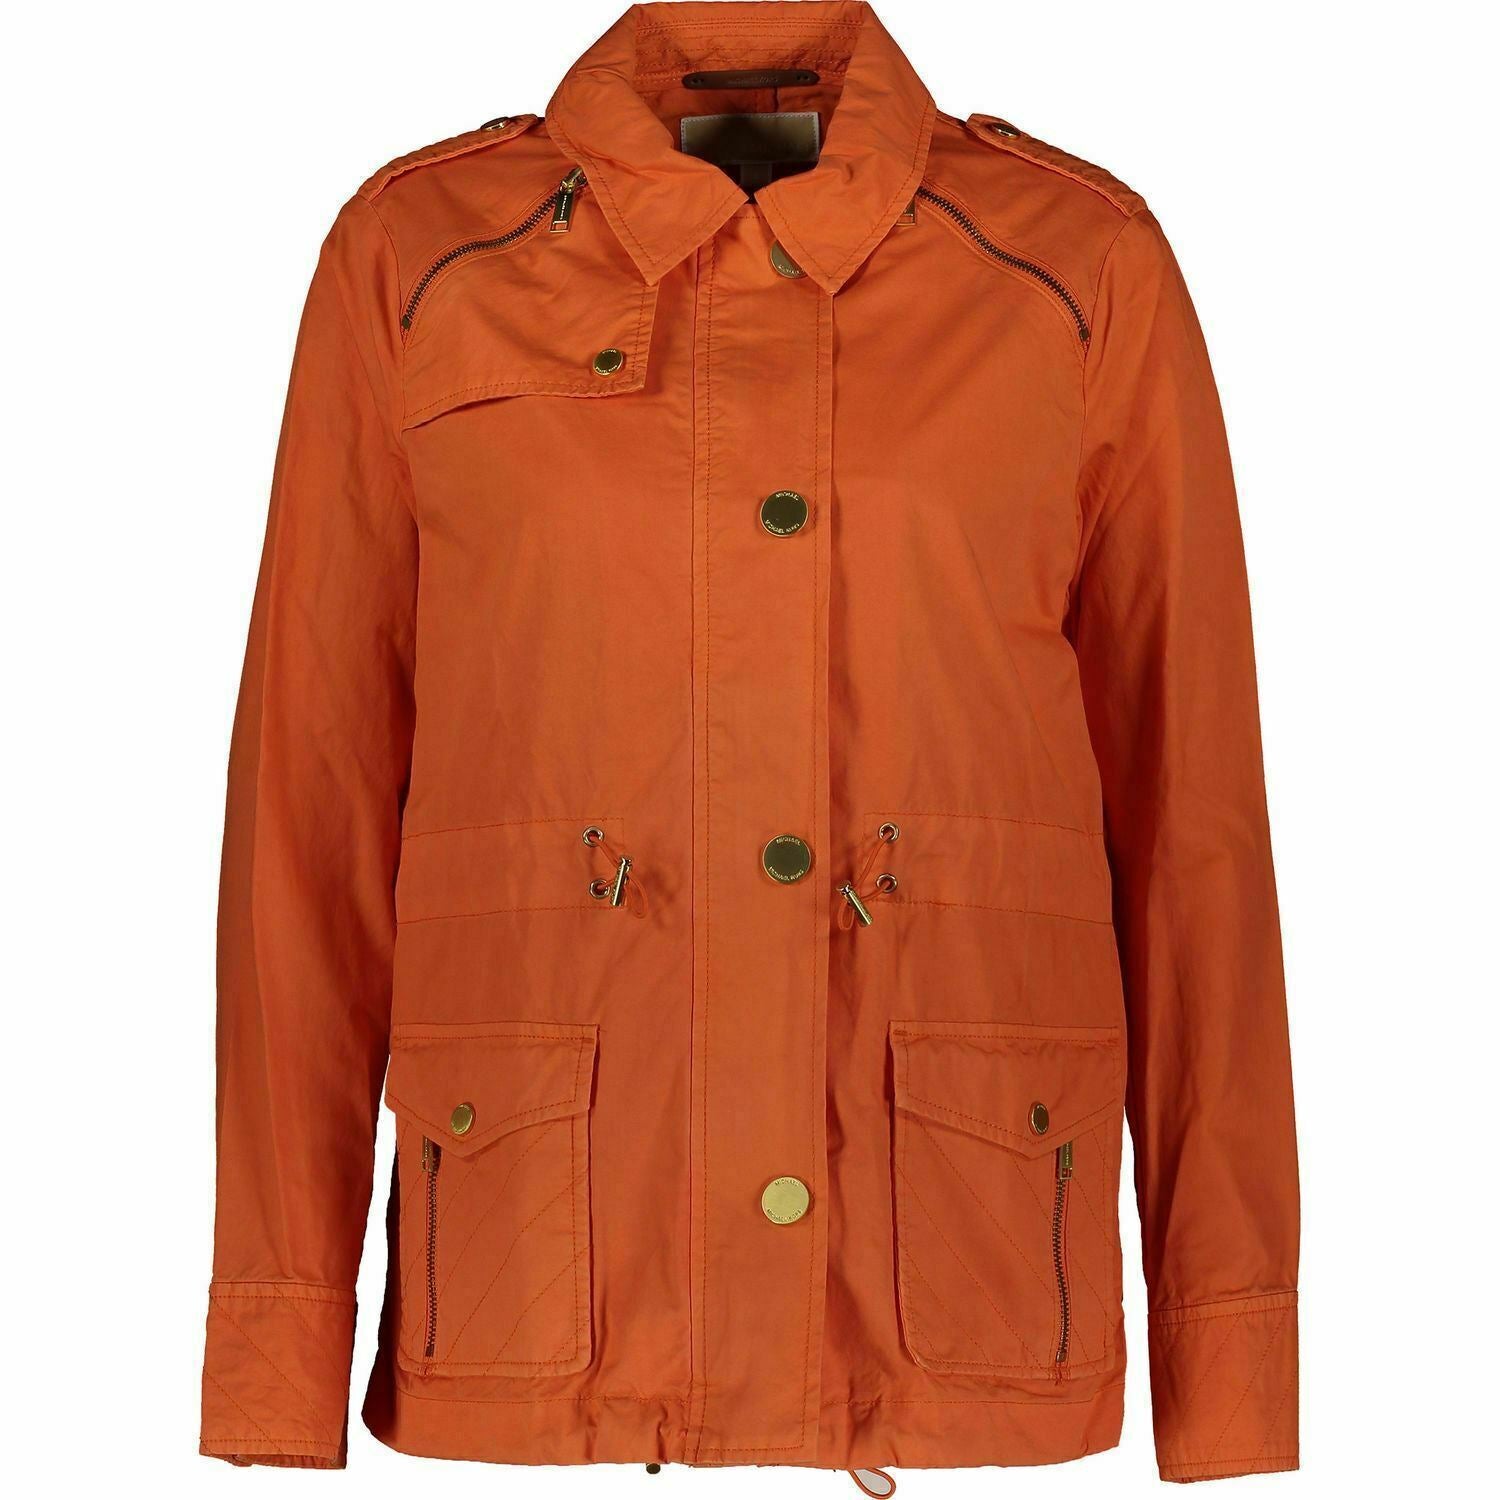 MICHAEL KORS Women's Orange Short Zipper Poppy Jacket - size XS